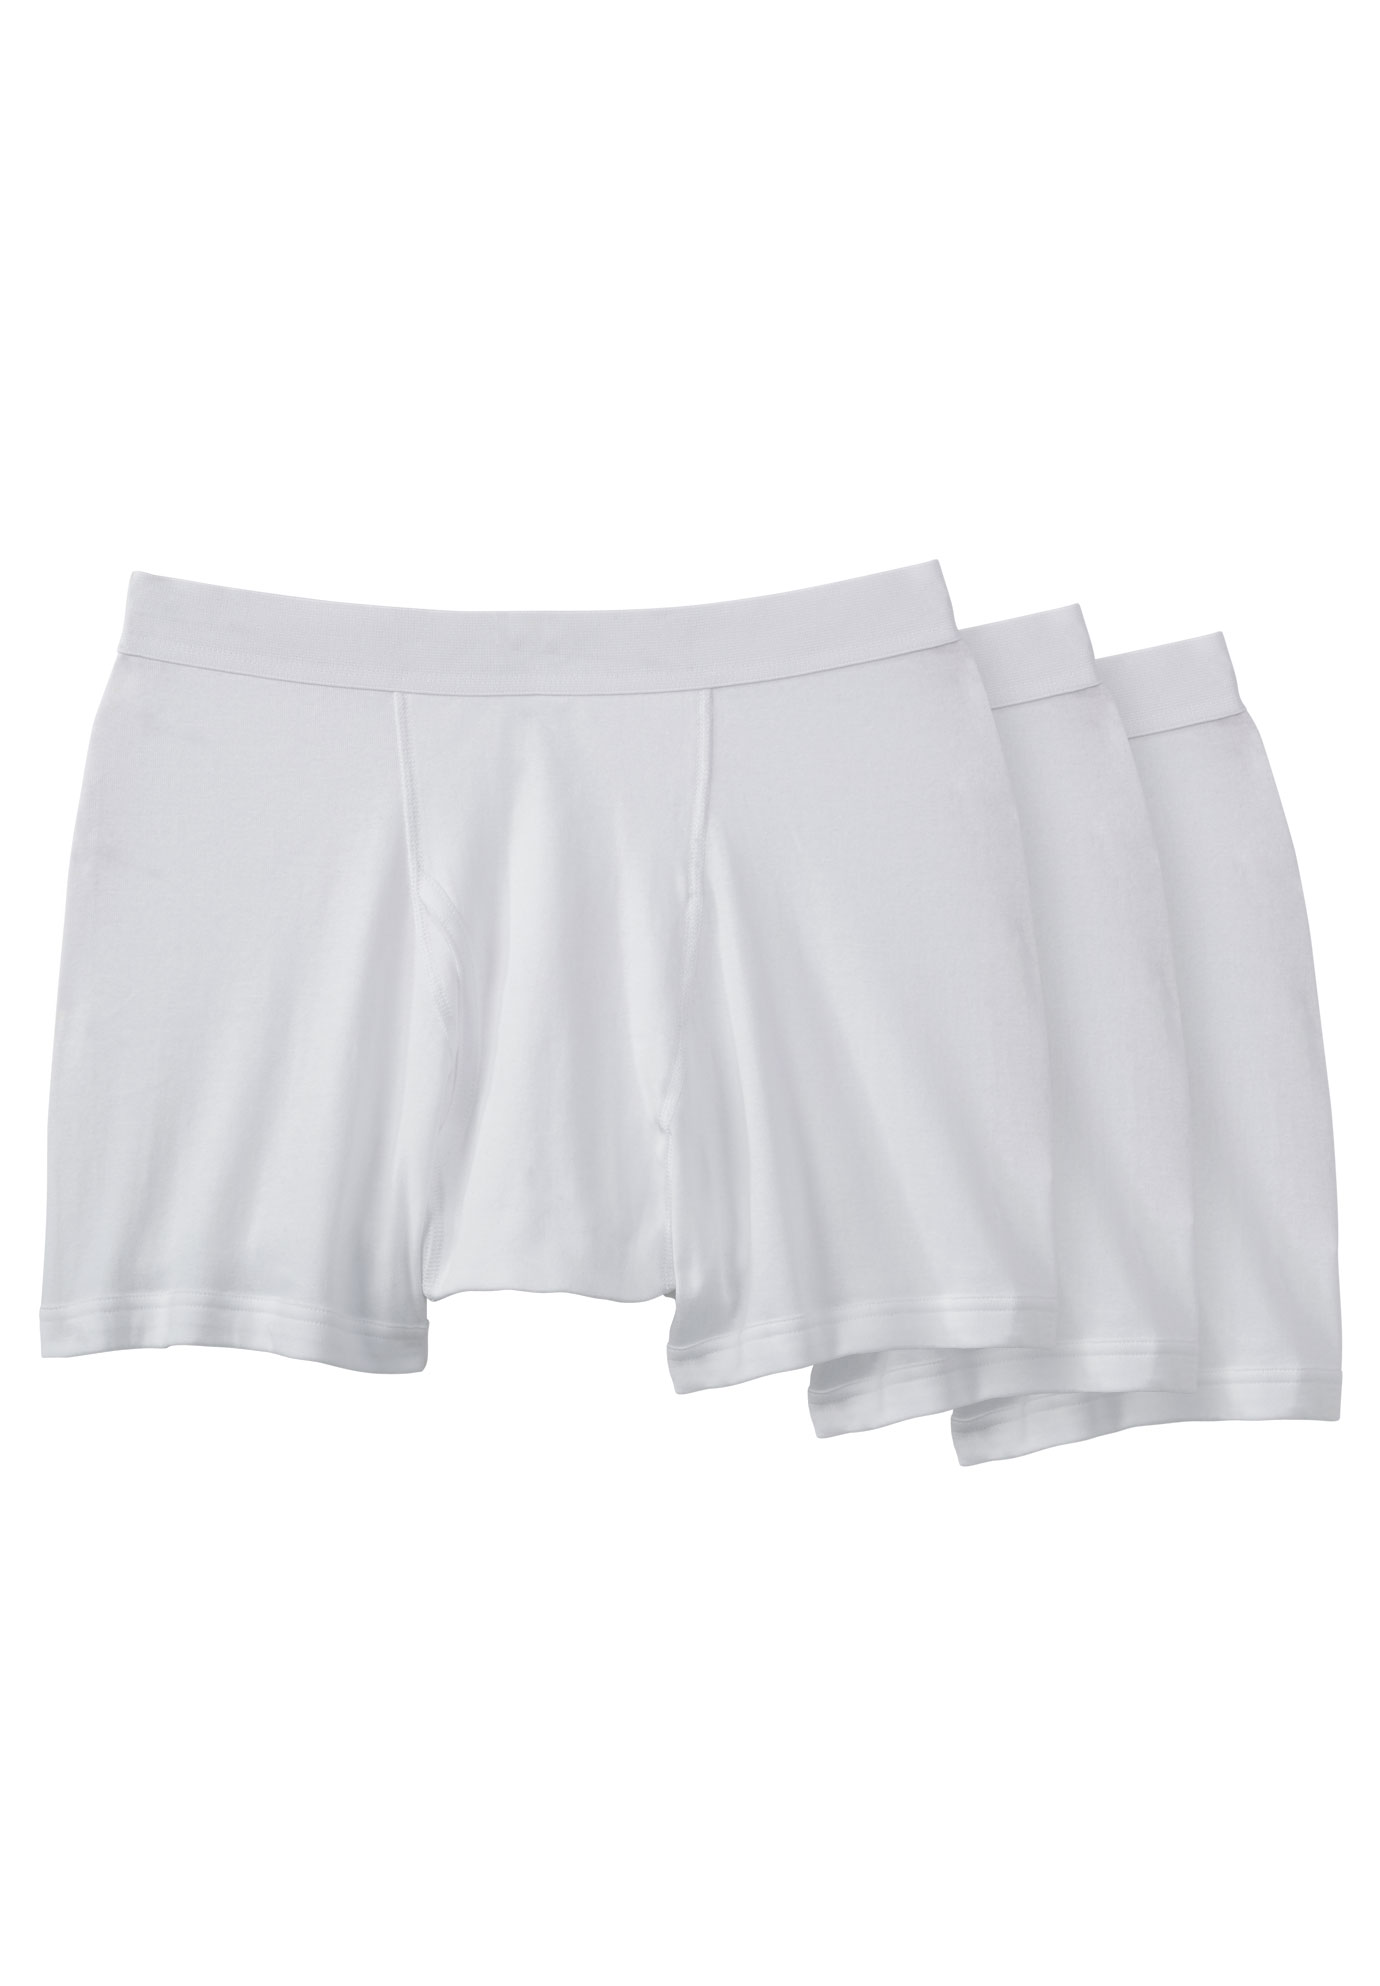 KingSize Mens Big /& Tall Cotton Mid-Length Briefs 3-Pack Underwear